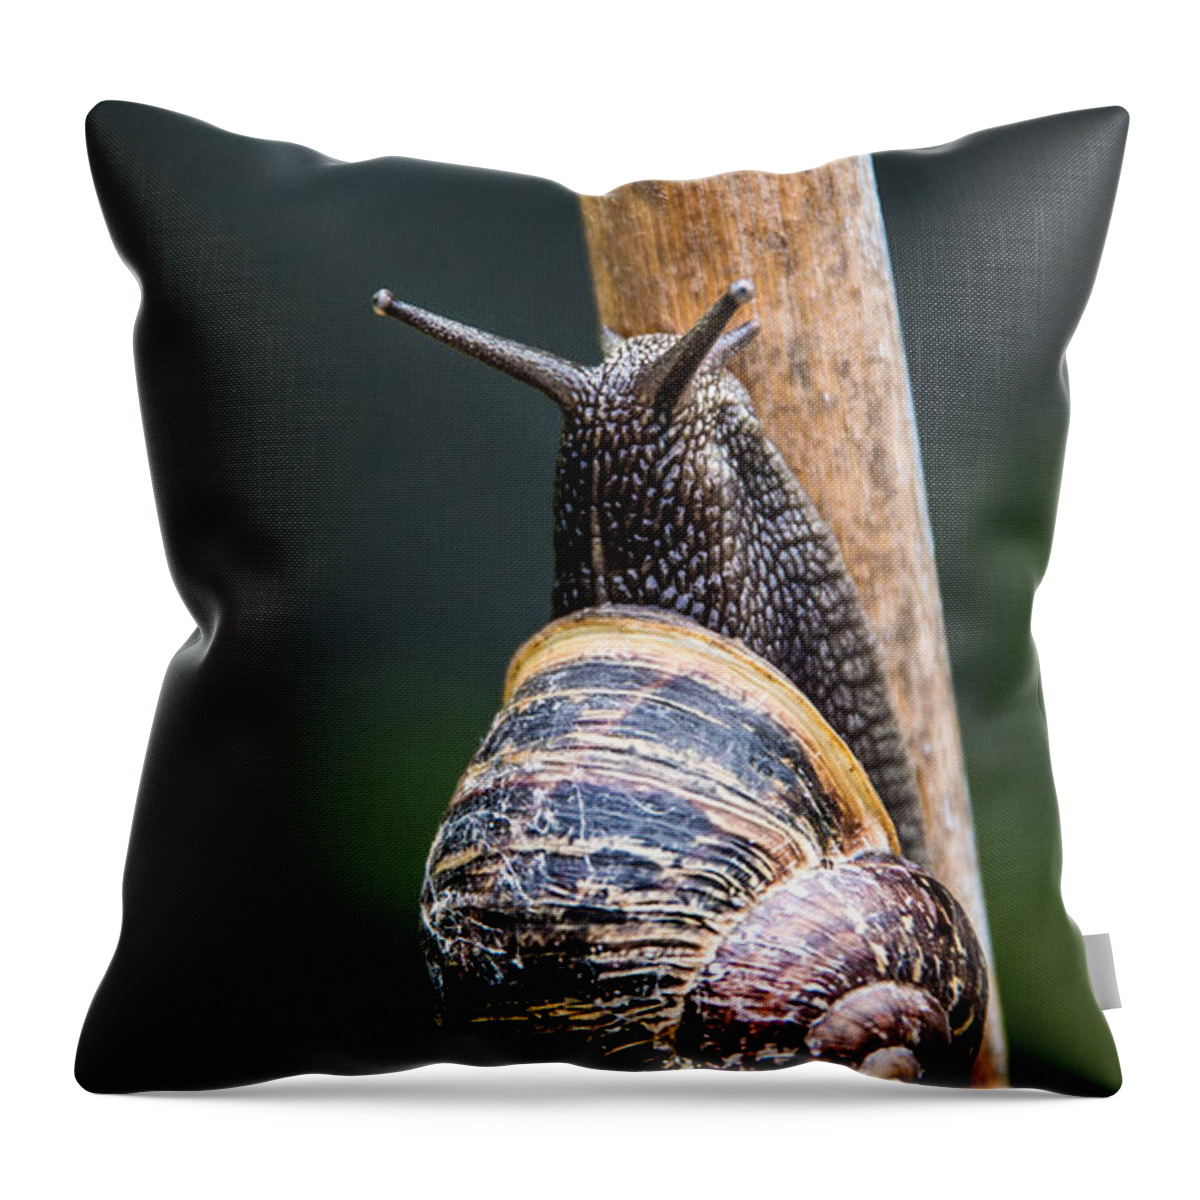 Snail Throw Pillow featuring the photograph Snail by Martina Fagan